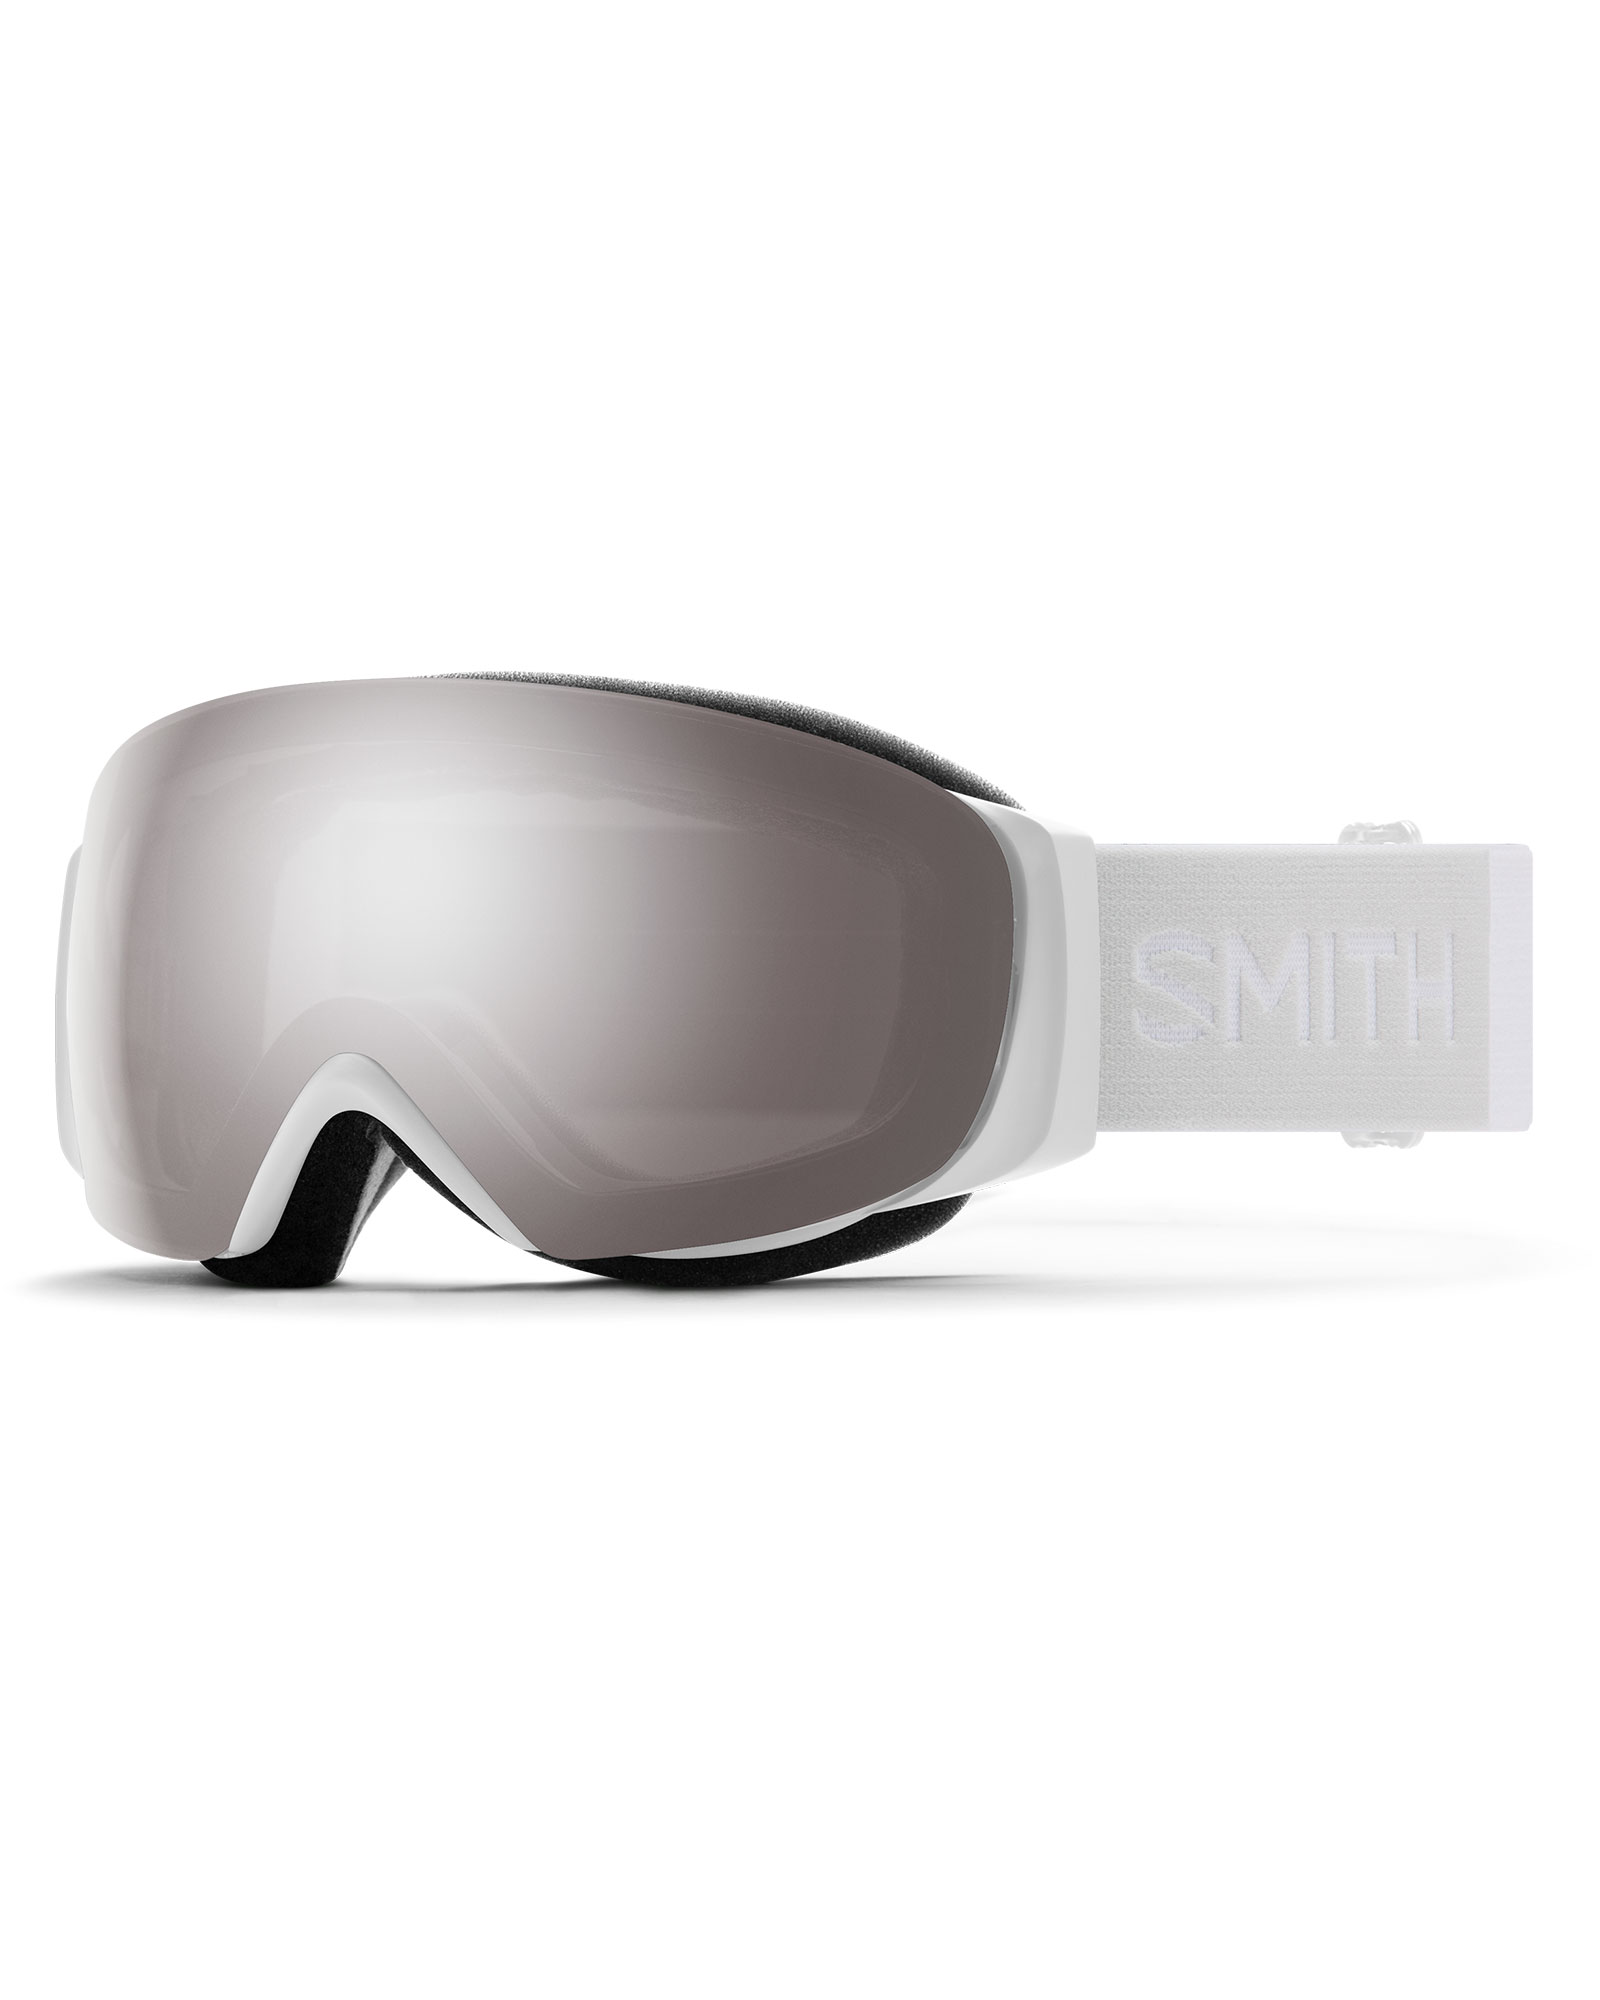 Smith I/o Mag S White Vapor / Chromapop Sun Platinum Mirror + Chromapop Storm Blue Sensor Mirror  Goggles